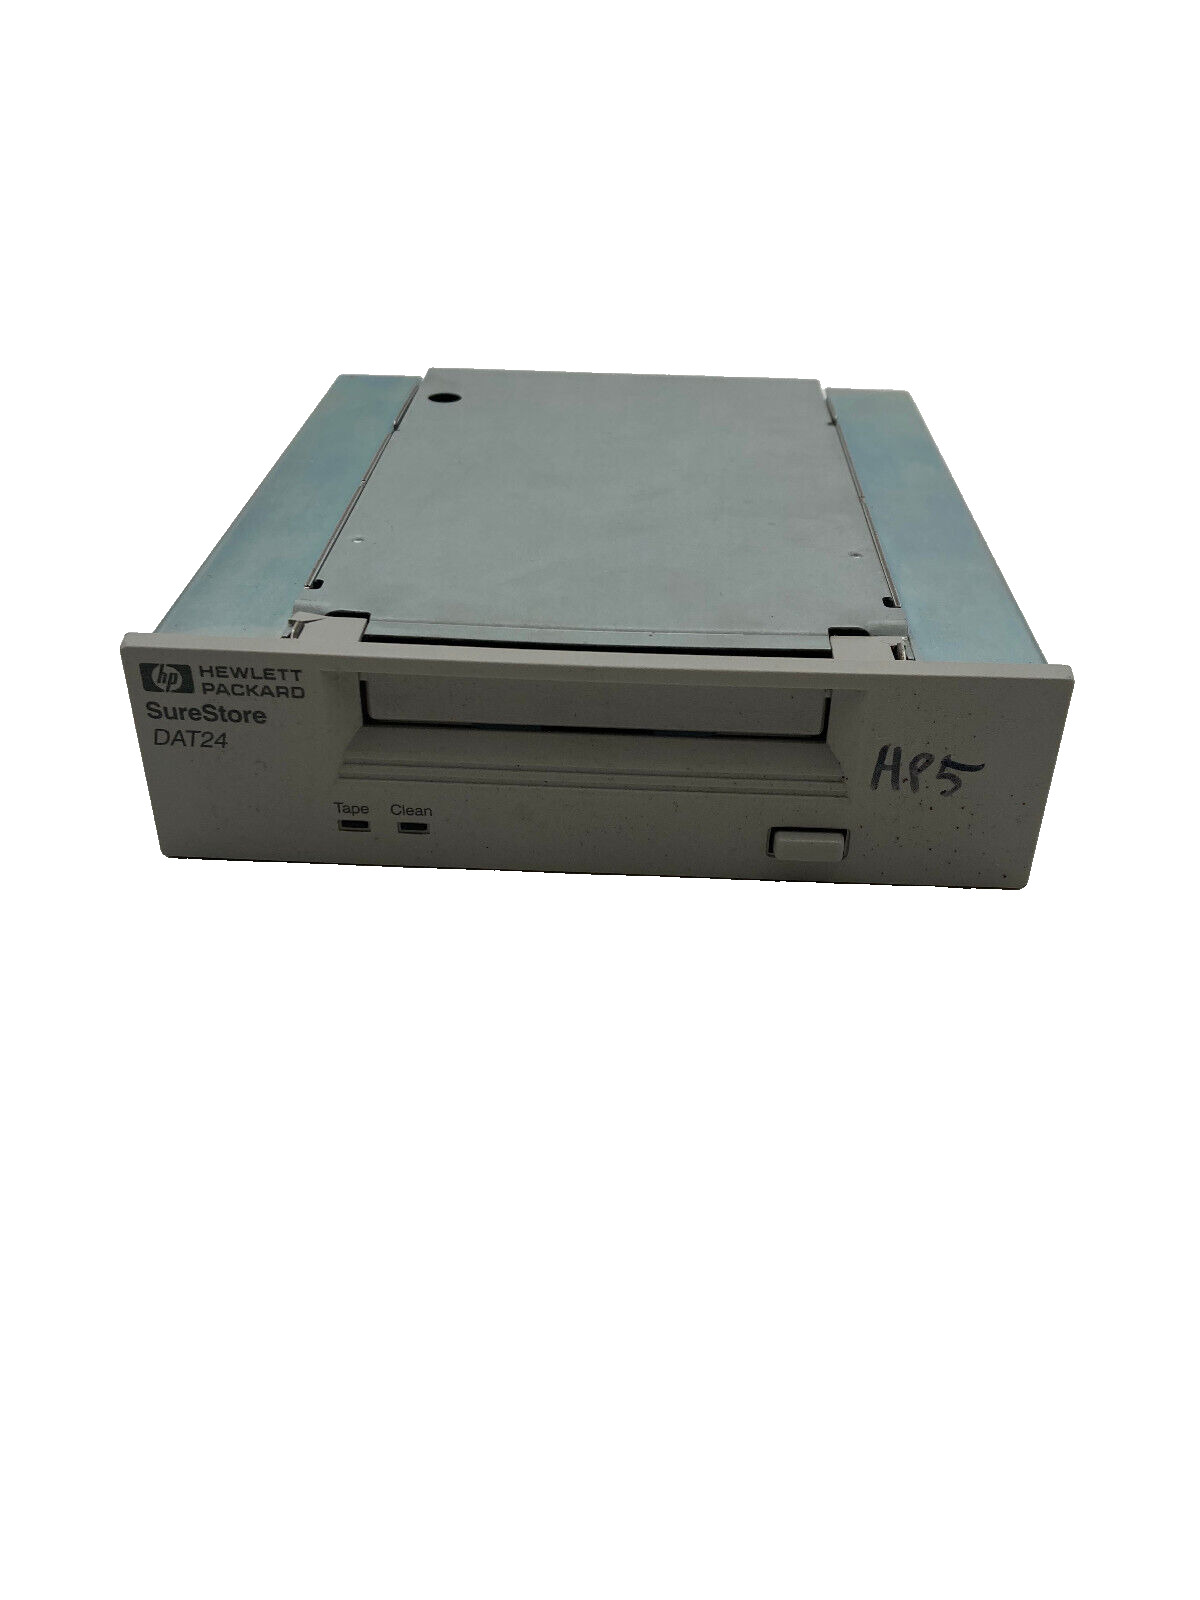 HP SURESTORE DAT24-C1555D C1555-60023 External Tape Drive FOR PARTS AS IS